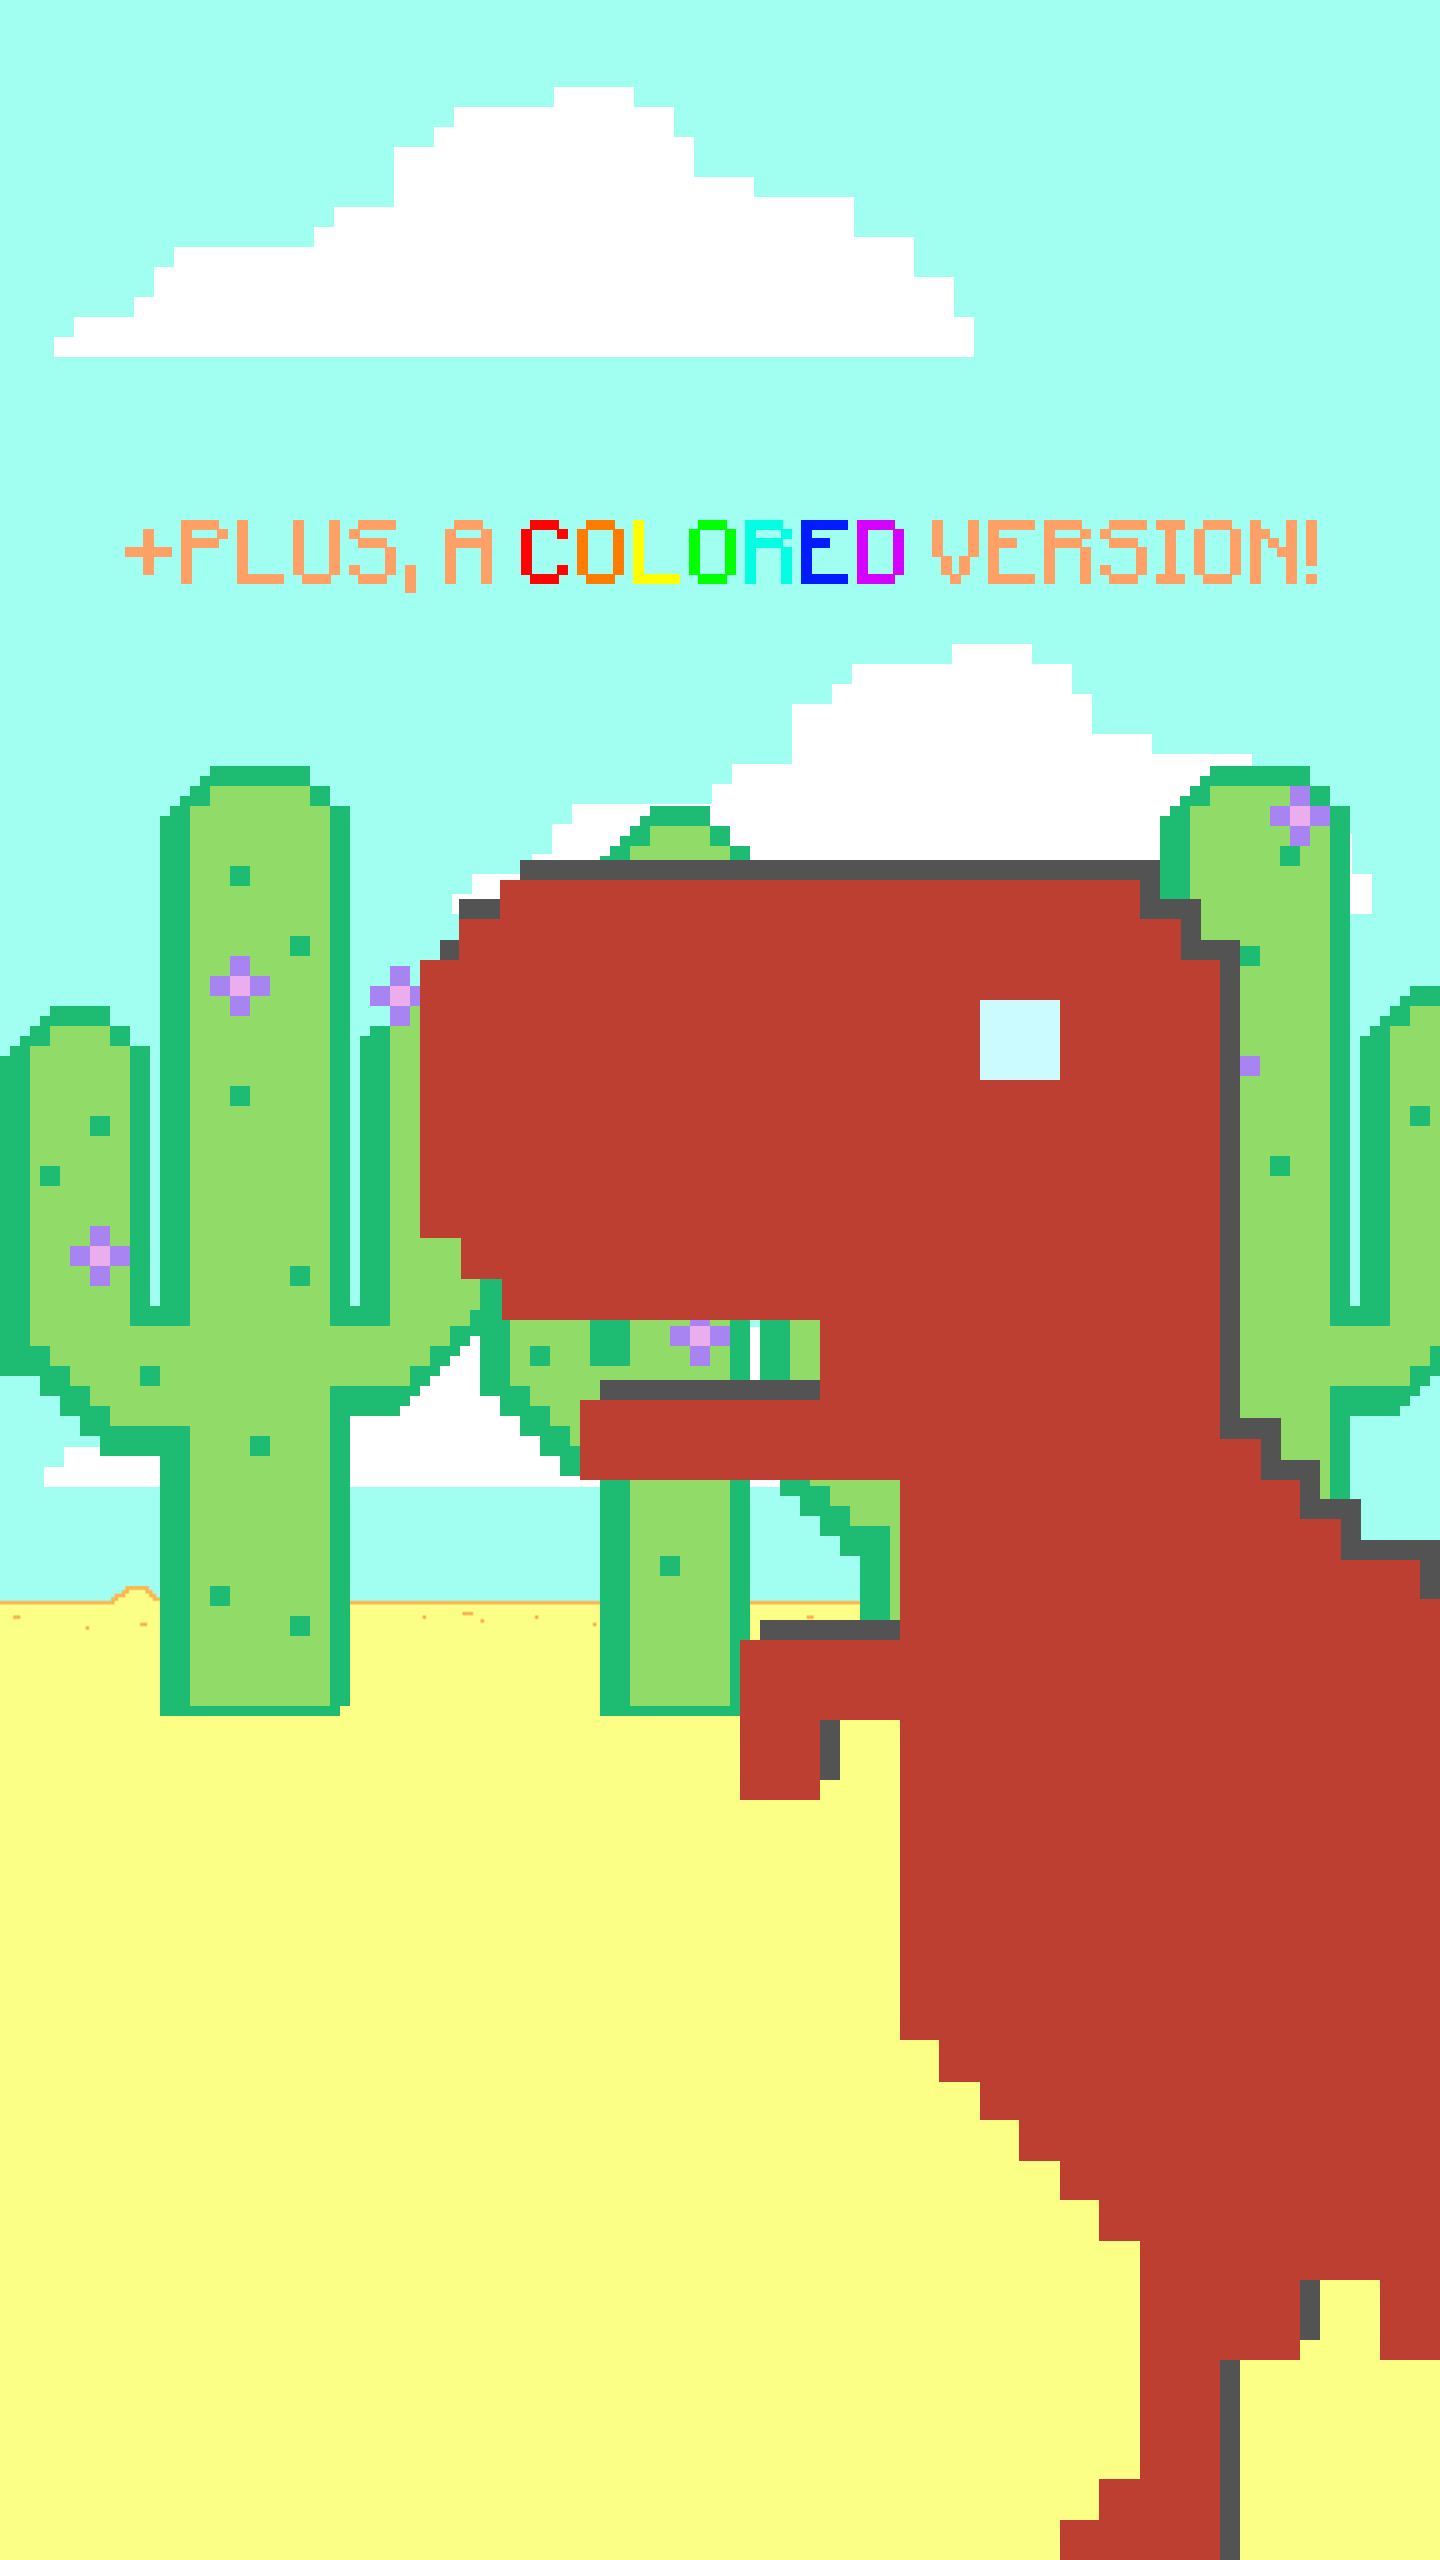 Color Dino Runner APK (Android Game) - Baixar Grátis